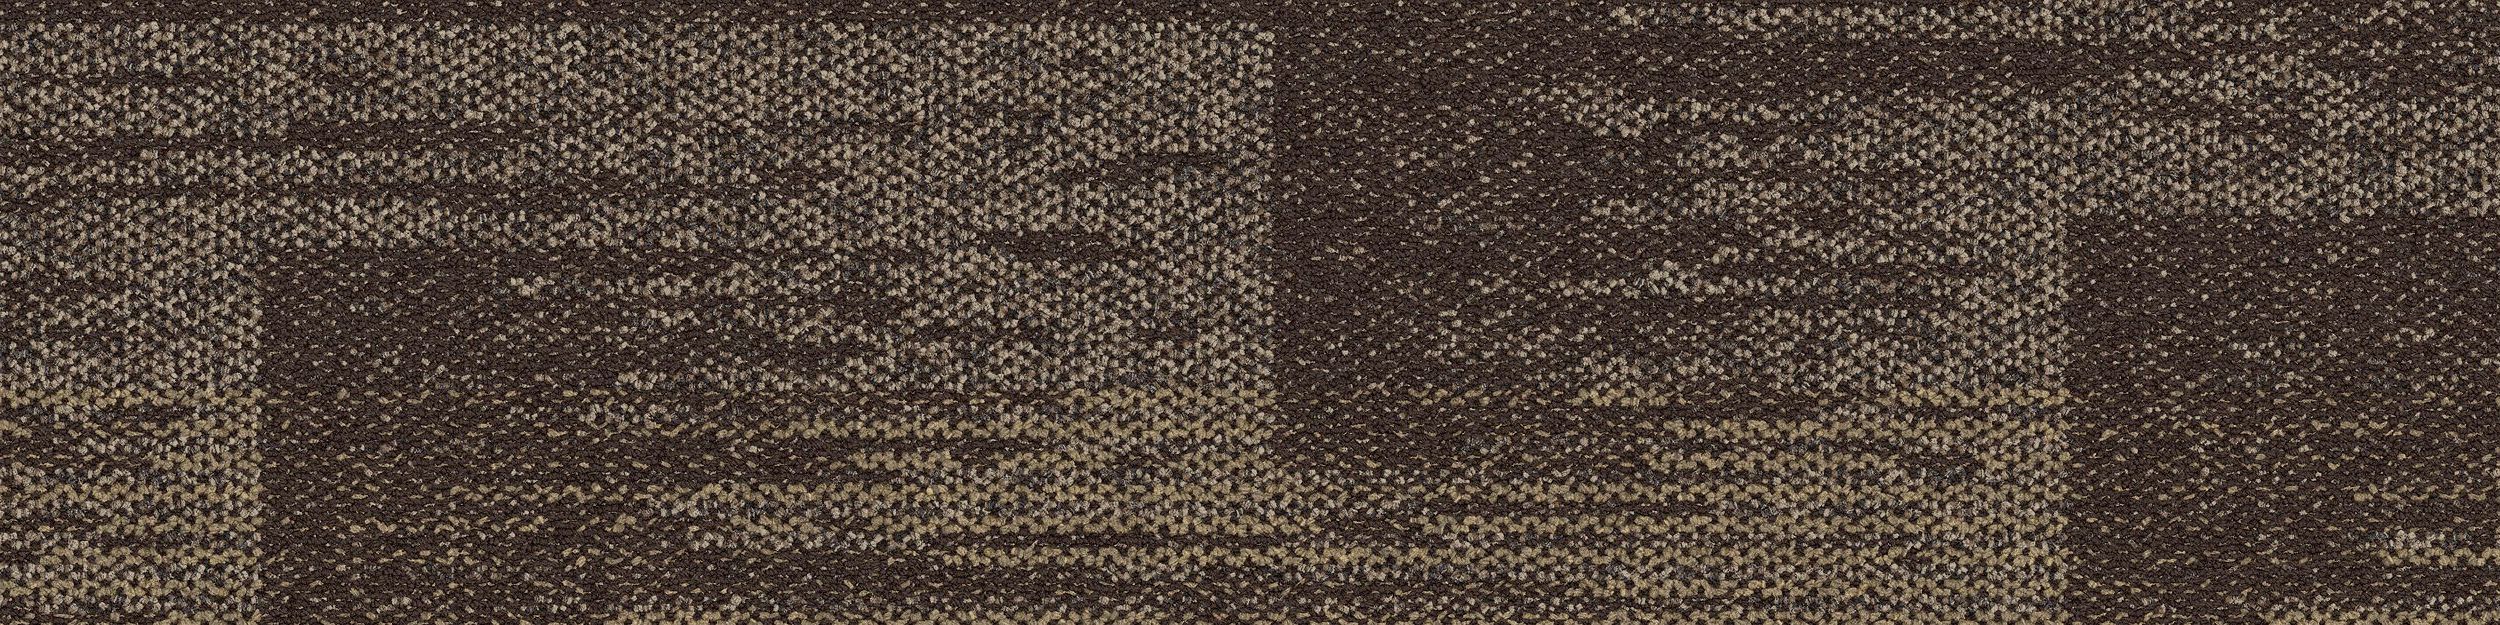 AE311 Carpet Tile In Mushroom imagen número 2